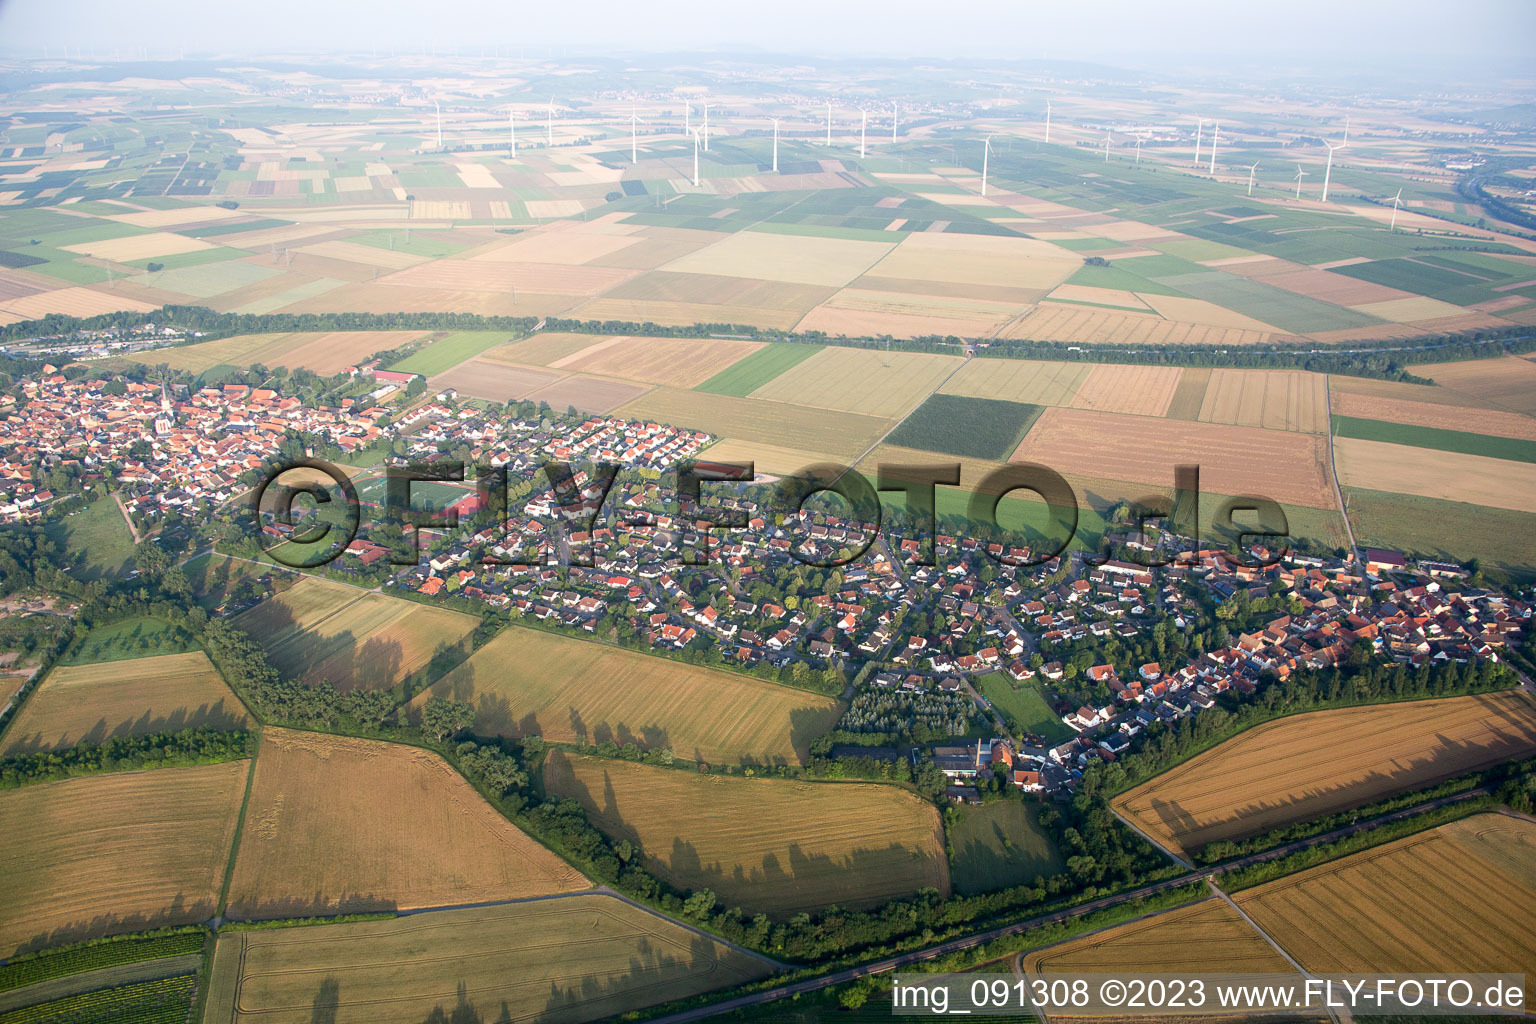 Armsheim in Schimsheim in the state Rhineland-Palatinate, Germany